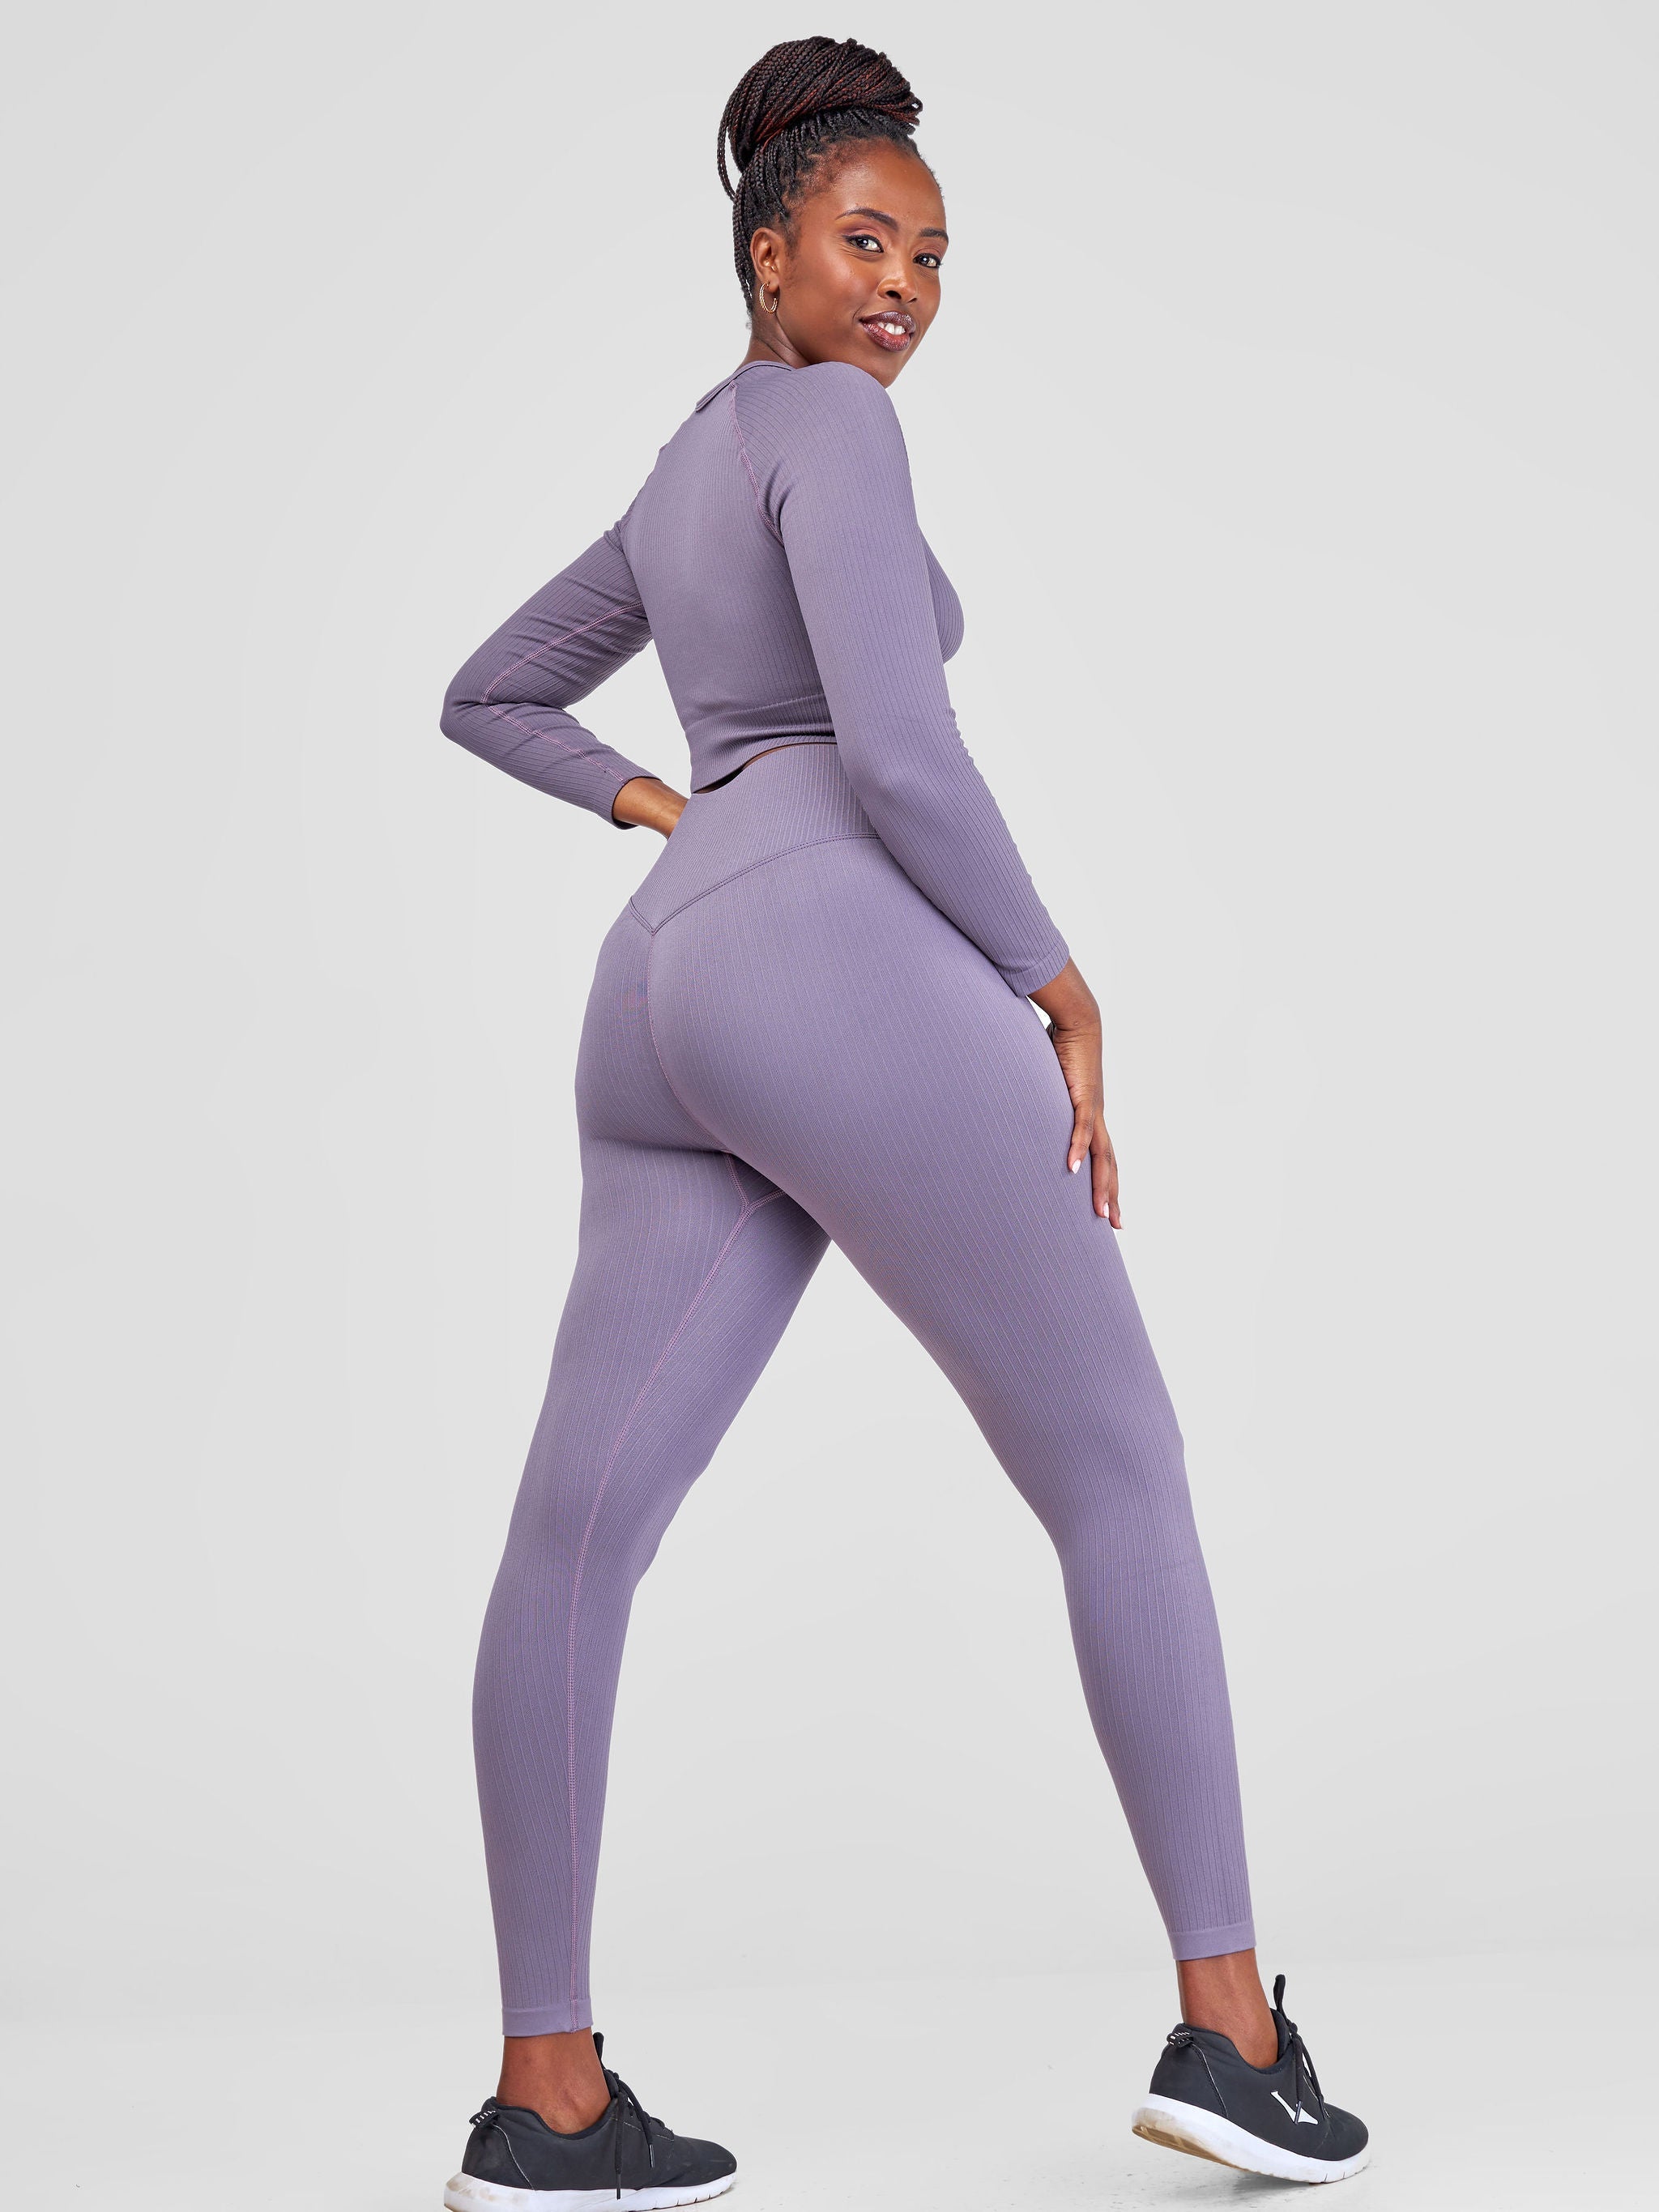 Ava Fitness Elevate 4 Piece Set - Purple Grey